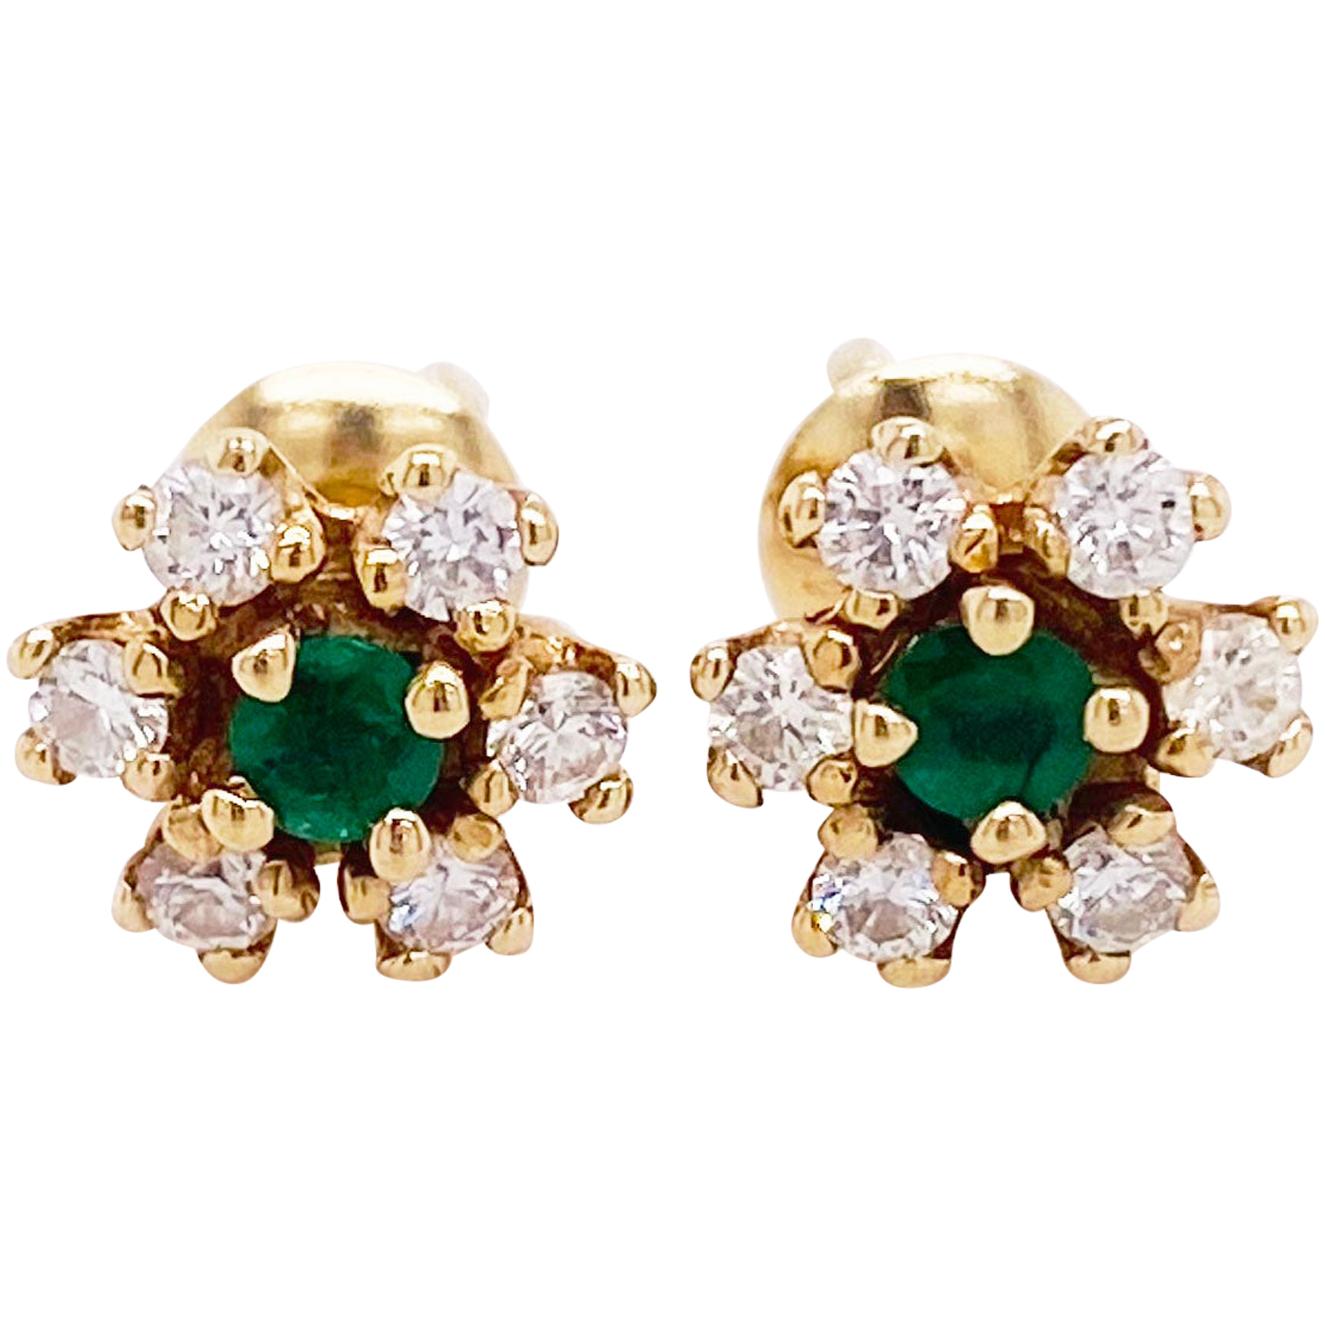 Emerald Diamond Earrings, Gold, .10ct Emerald, .24ct Diamond, Studs, Flower